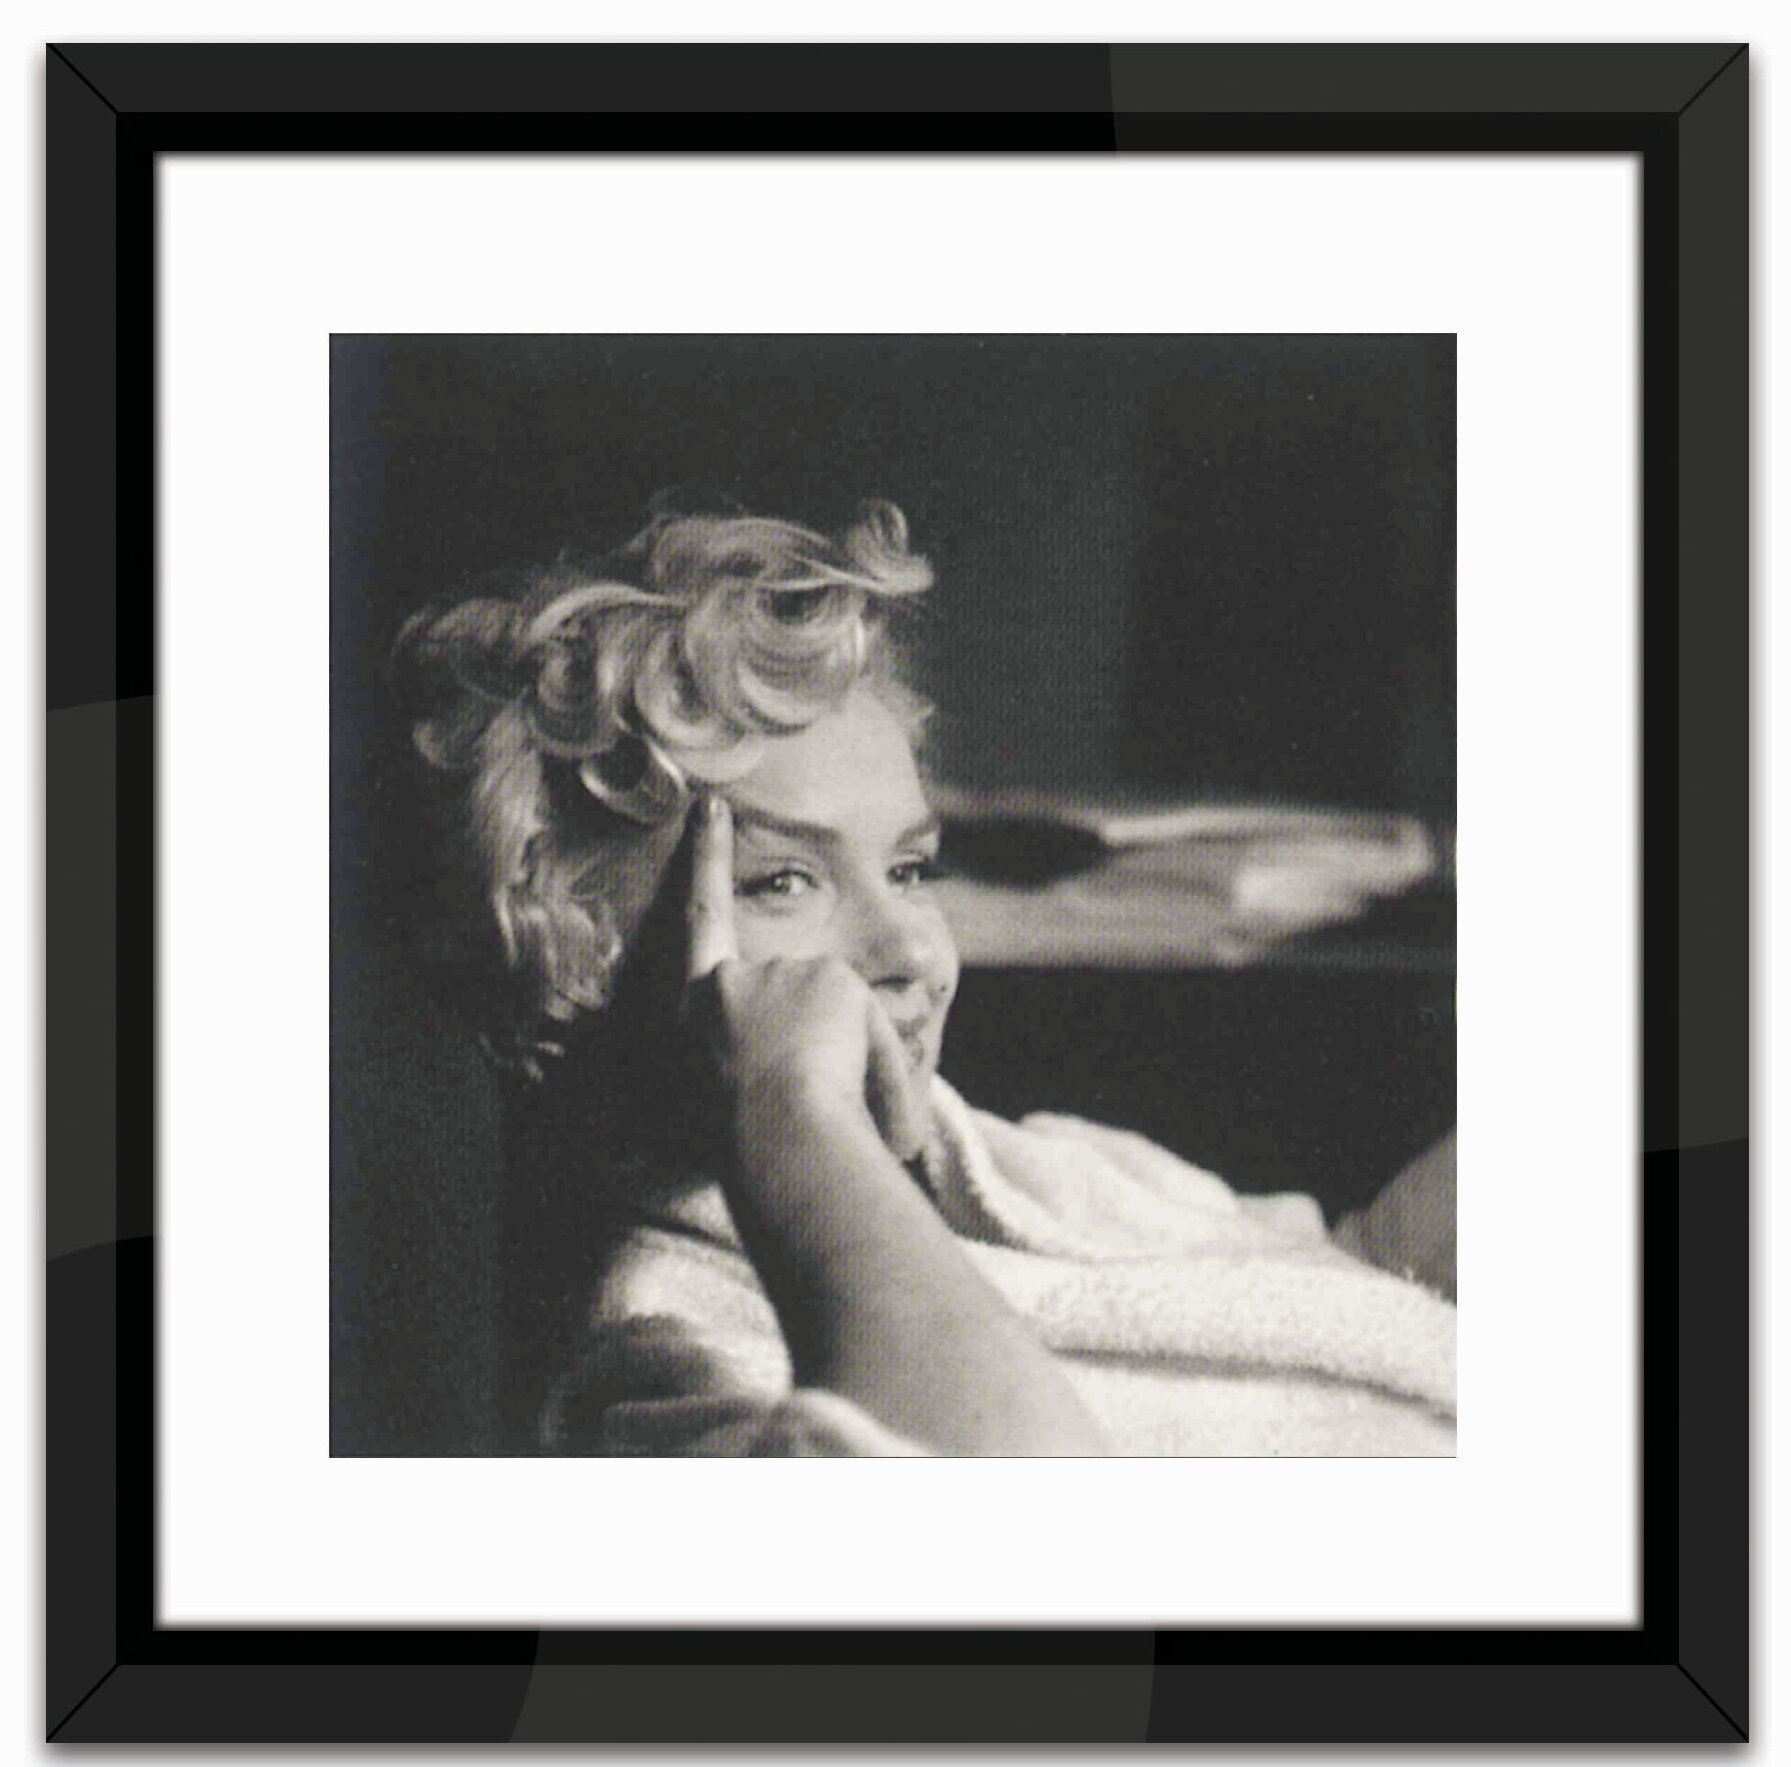 Marilyn Monroe in Stockings Star Poster